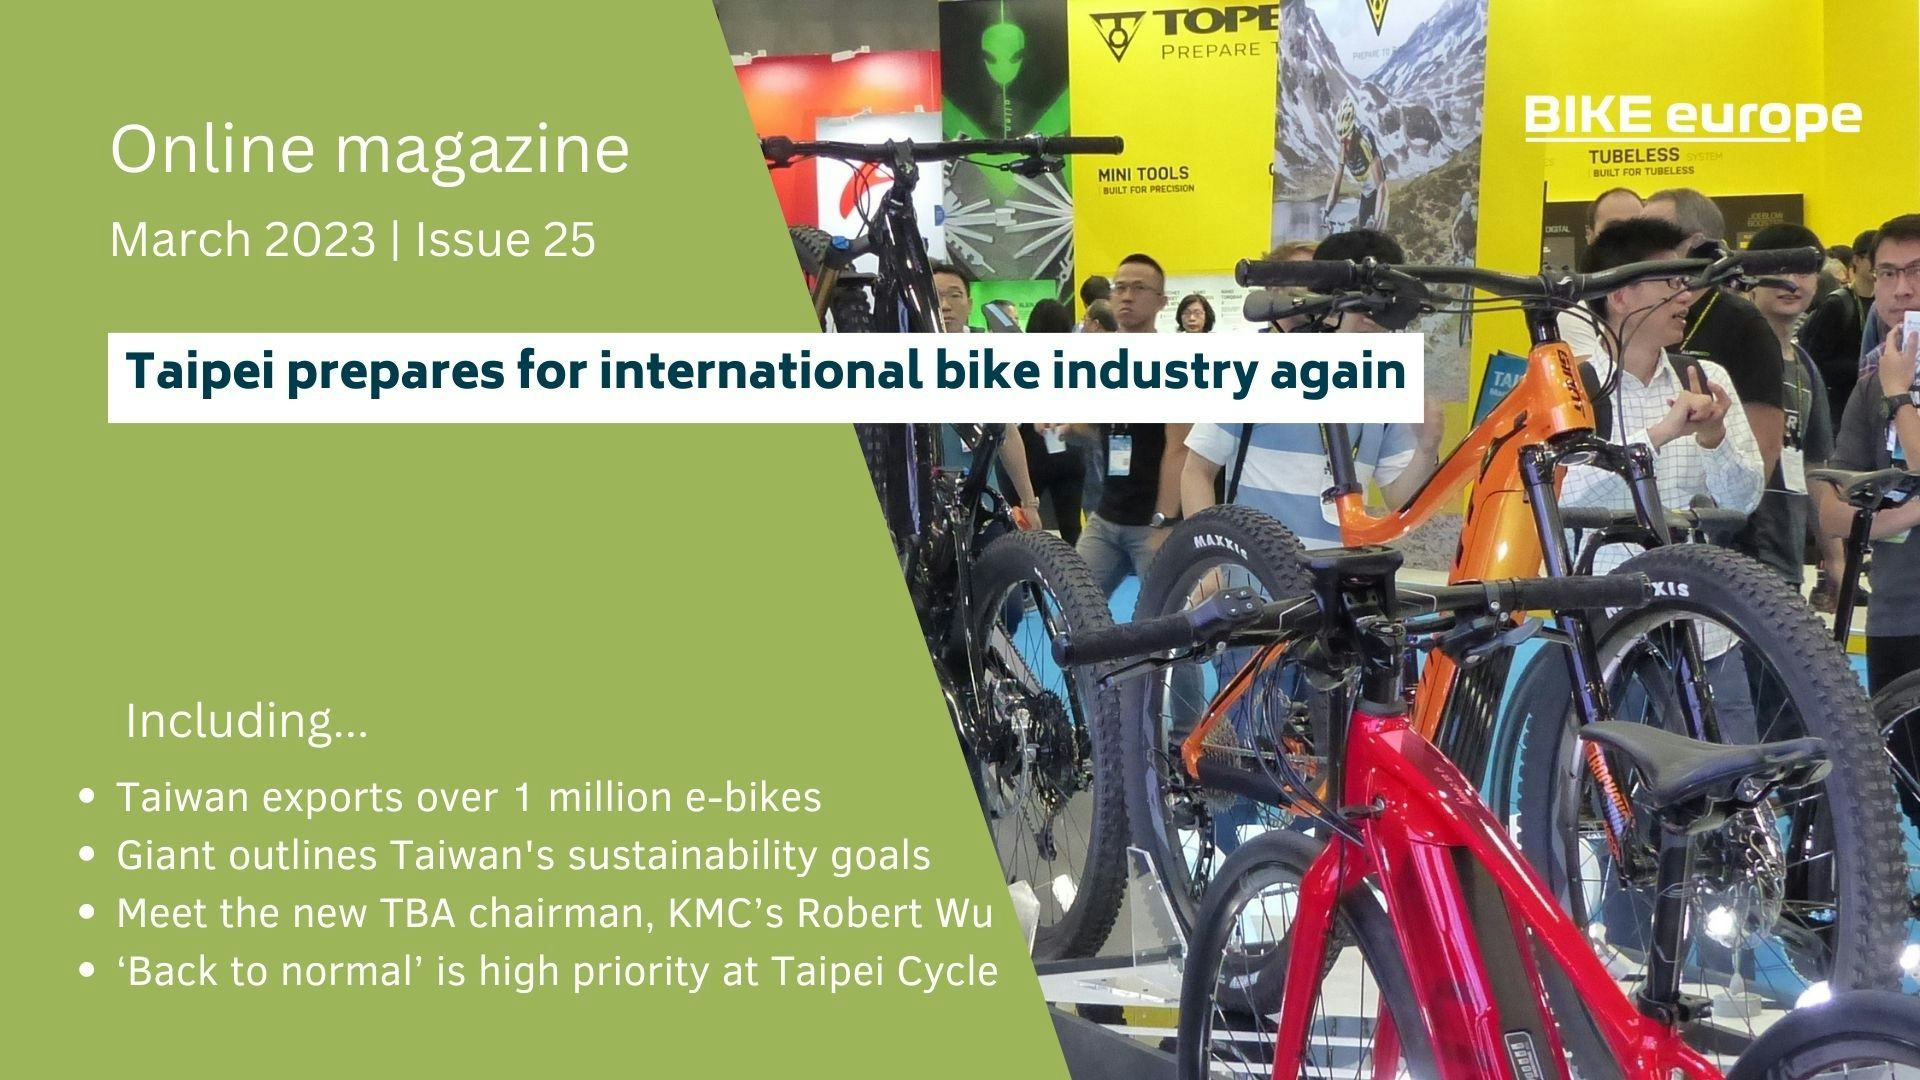 Taipei prepares for international bike industry again